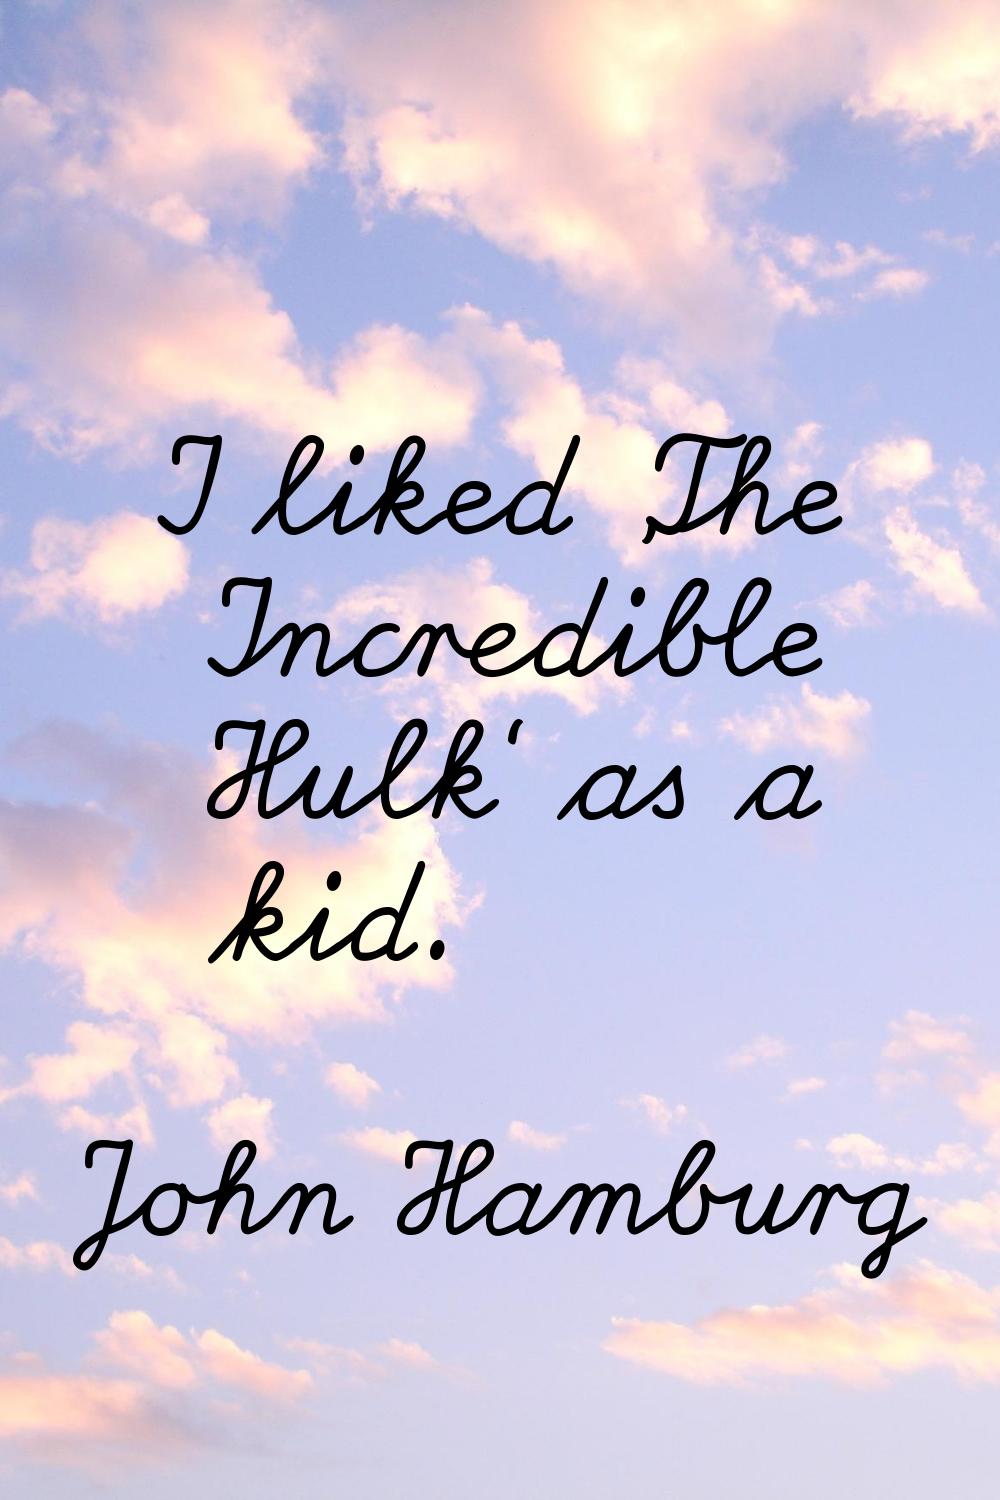 I liked 'The Incredible Hulk' as a kid.